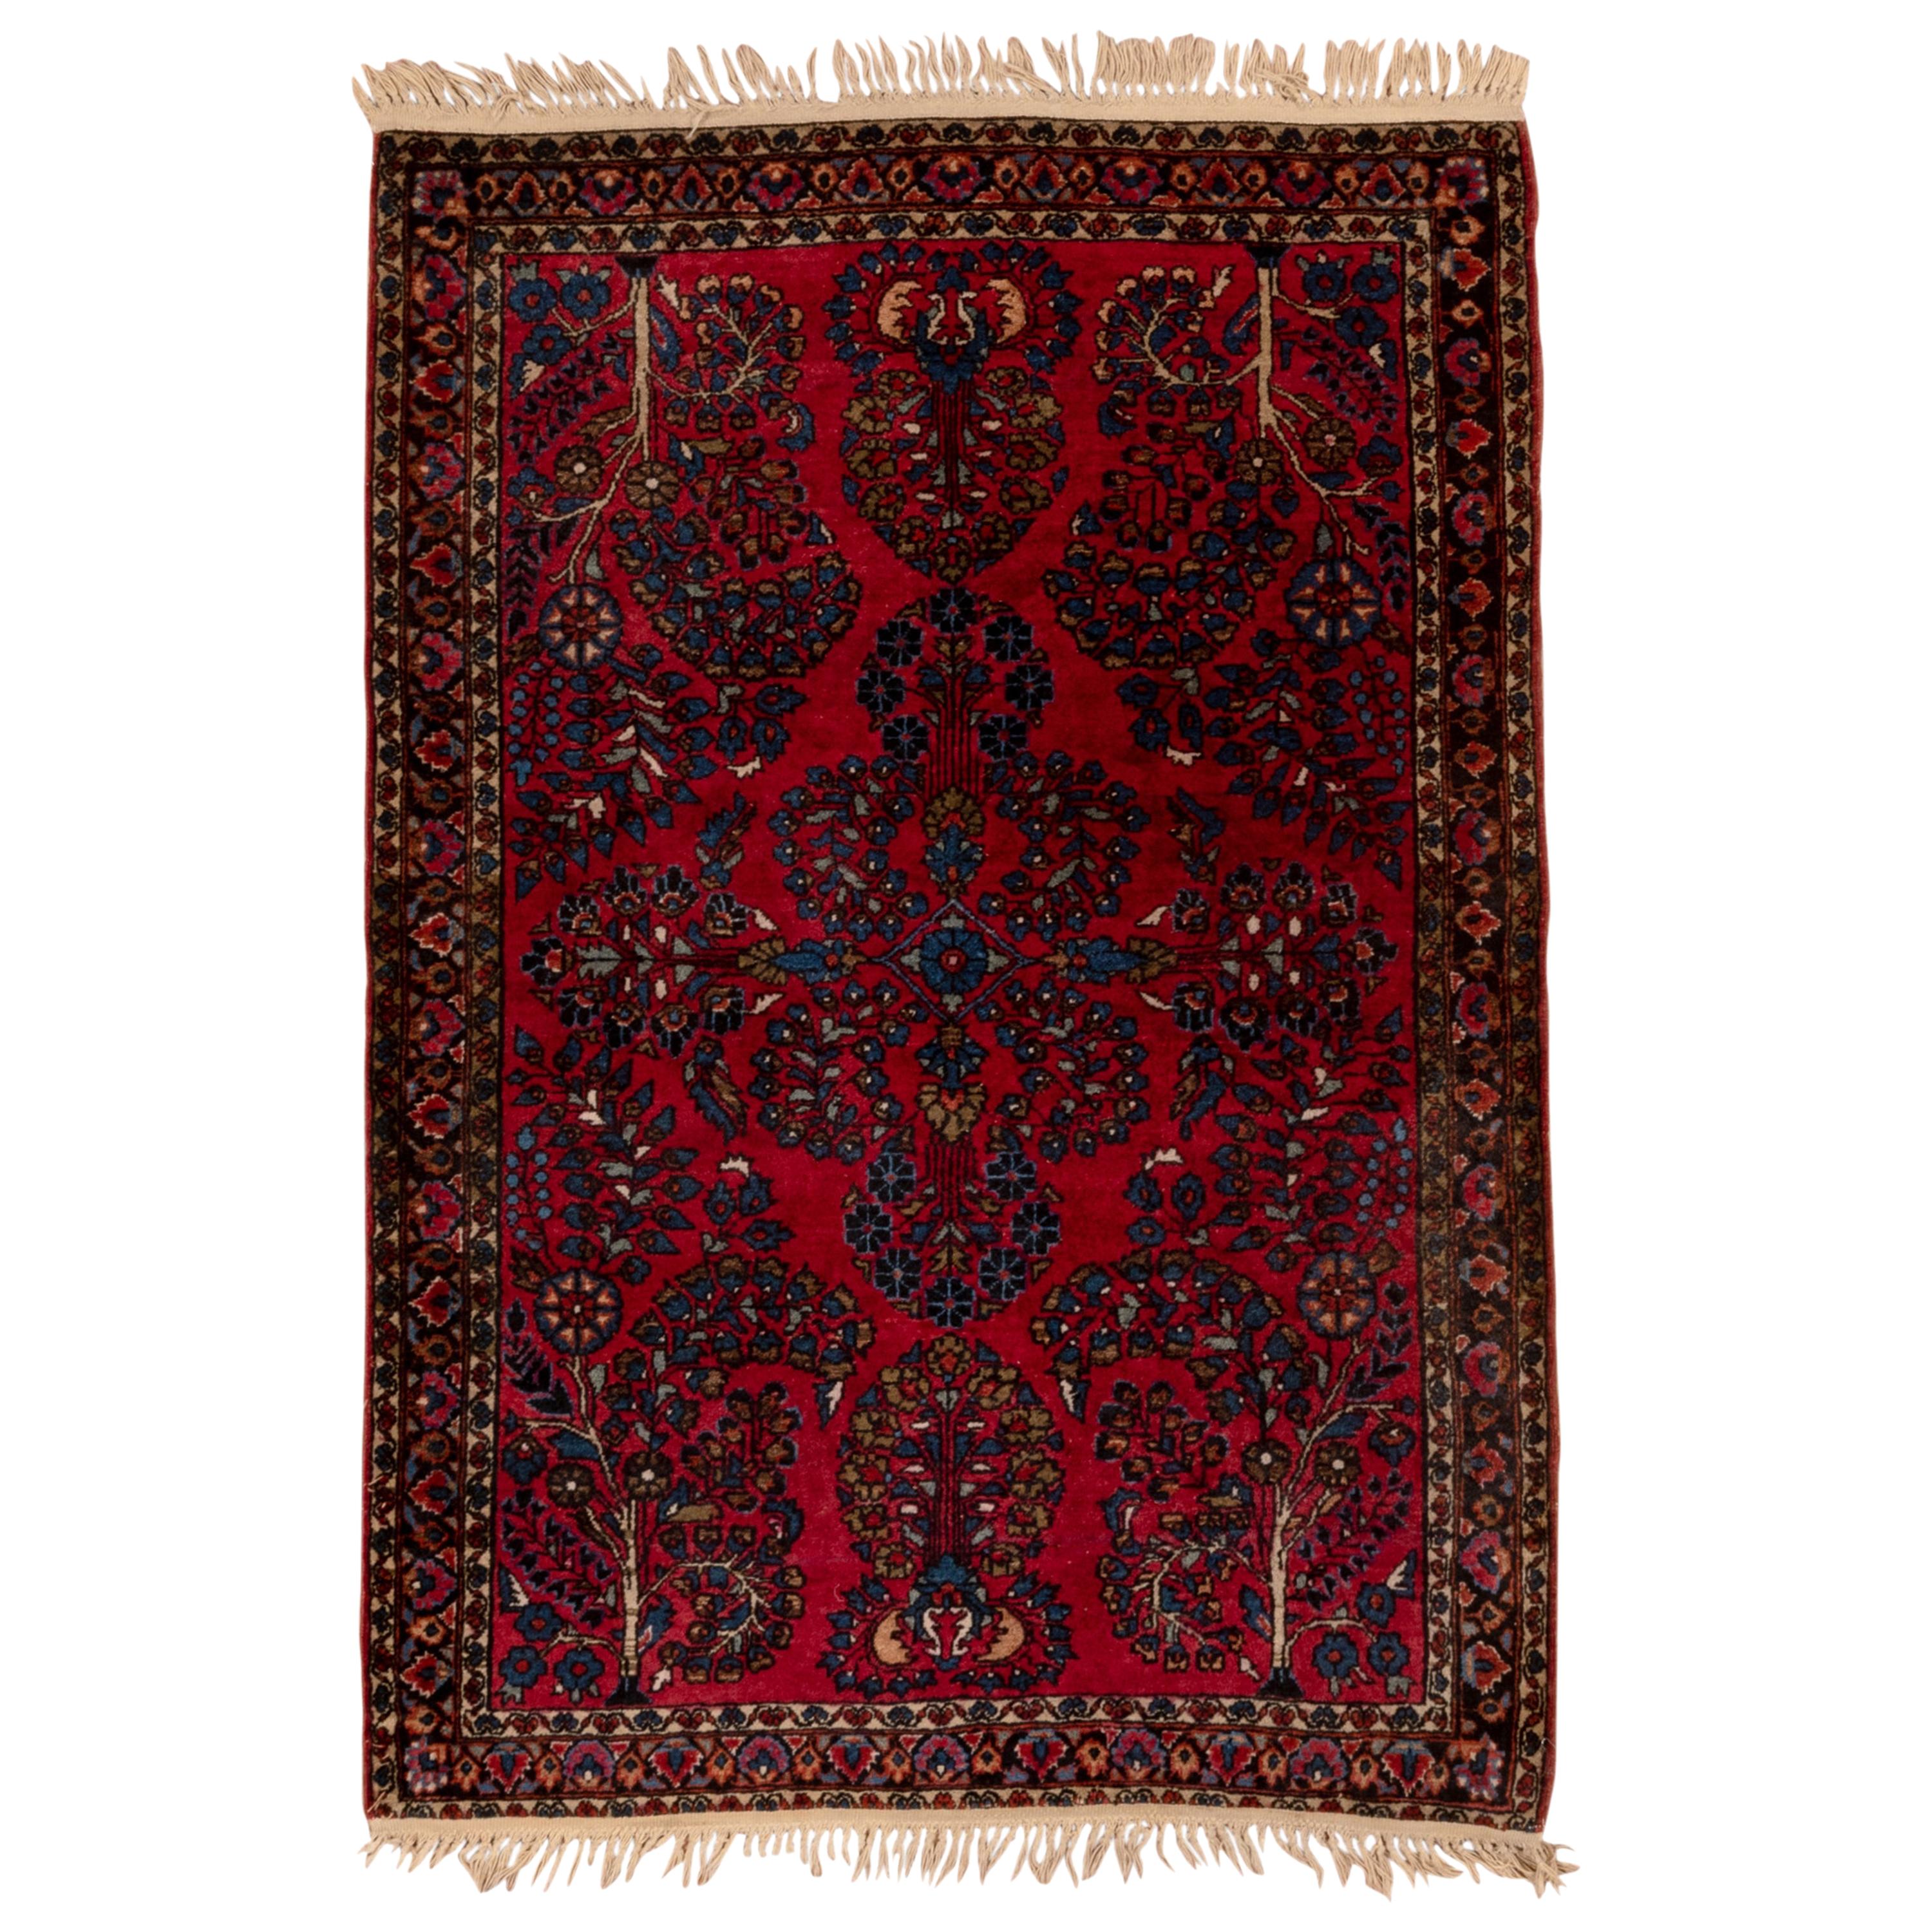 Mid-20th Century Persian Sarouk Rug, Red Field, Medium Pile, Blue Acents